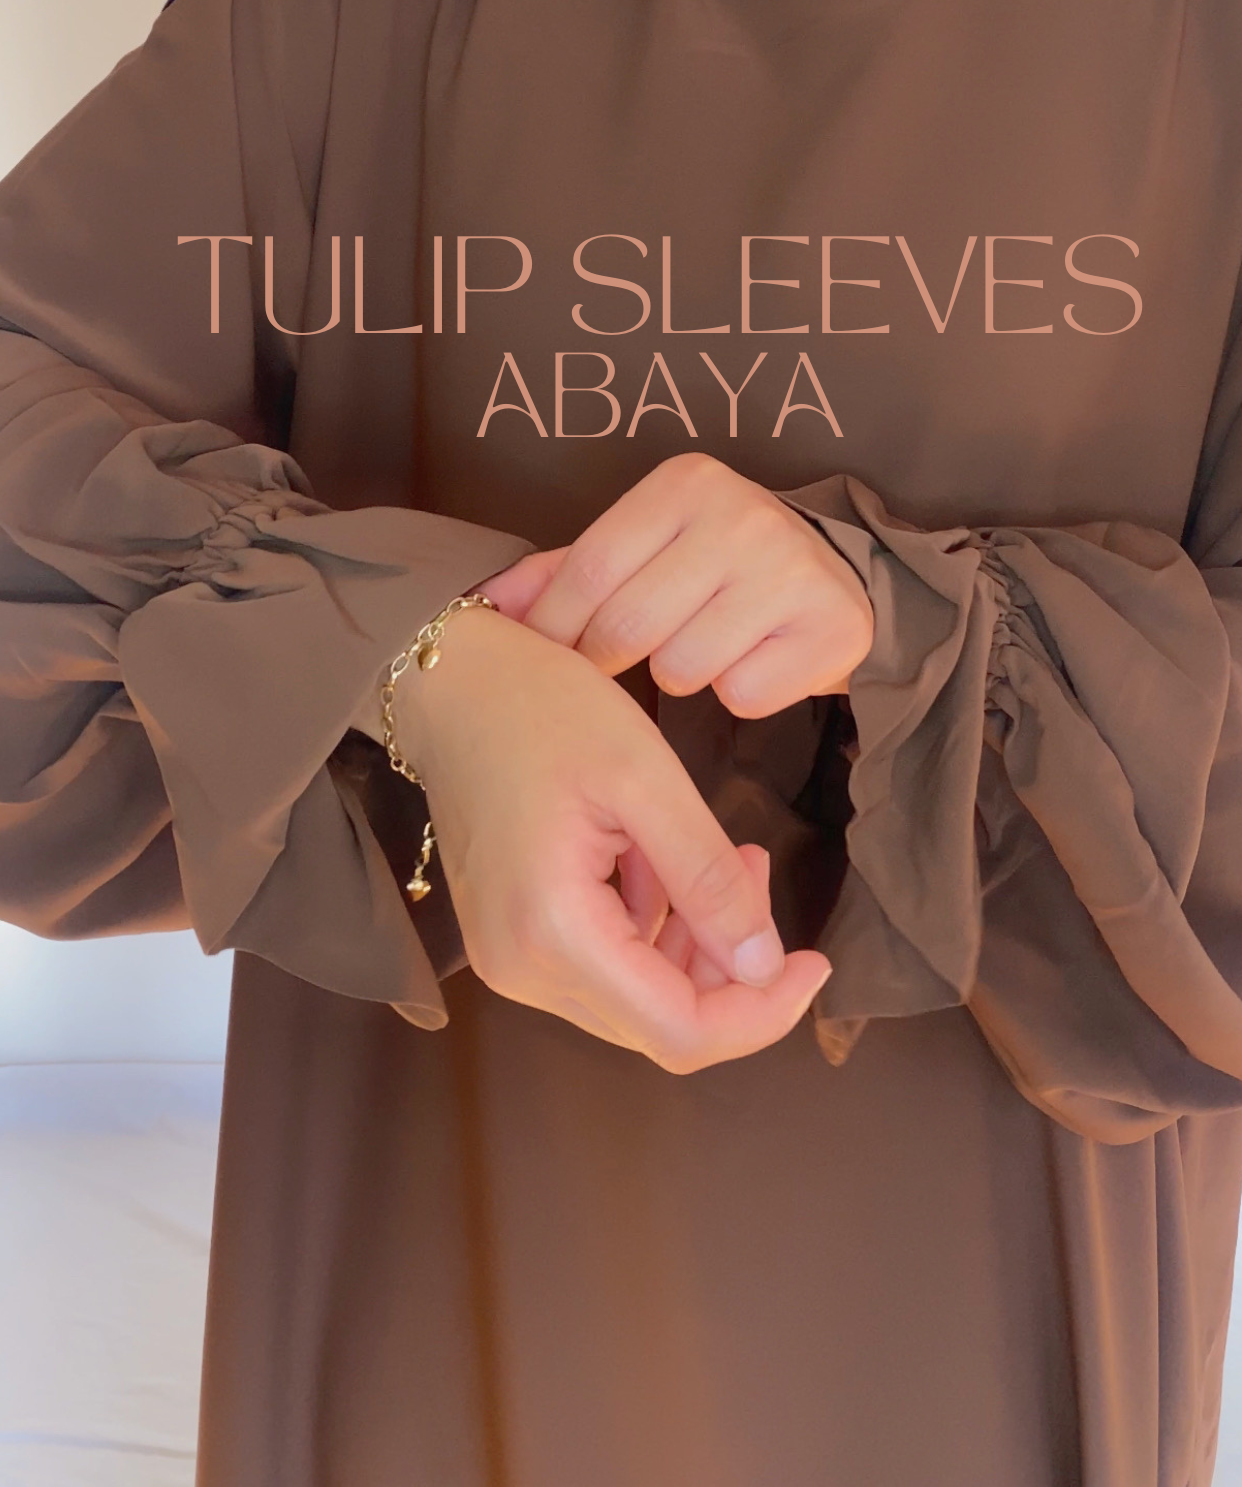 Tulip sleeve abaya